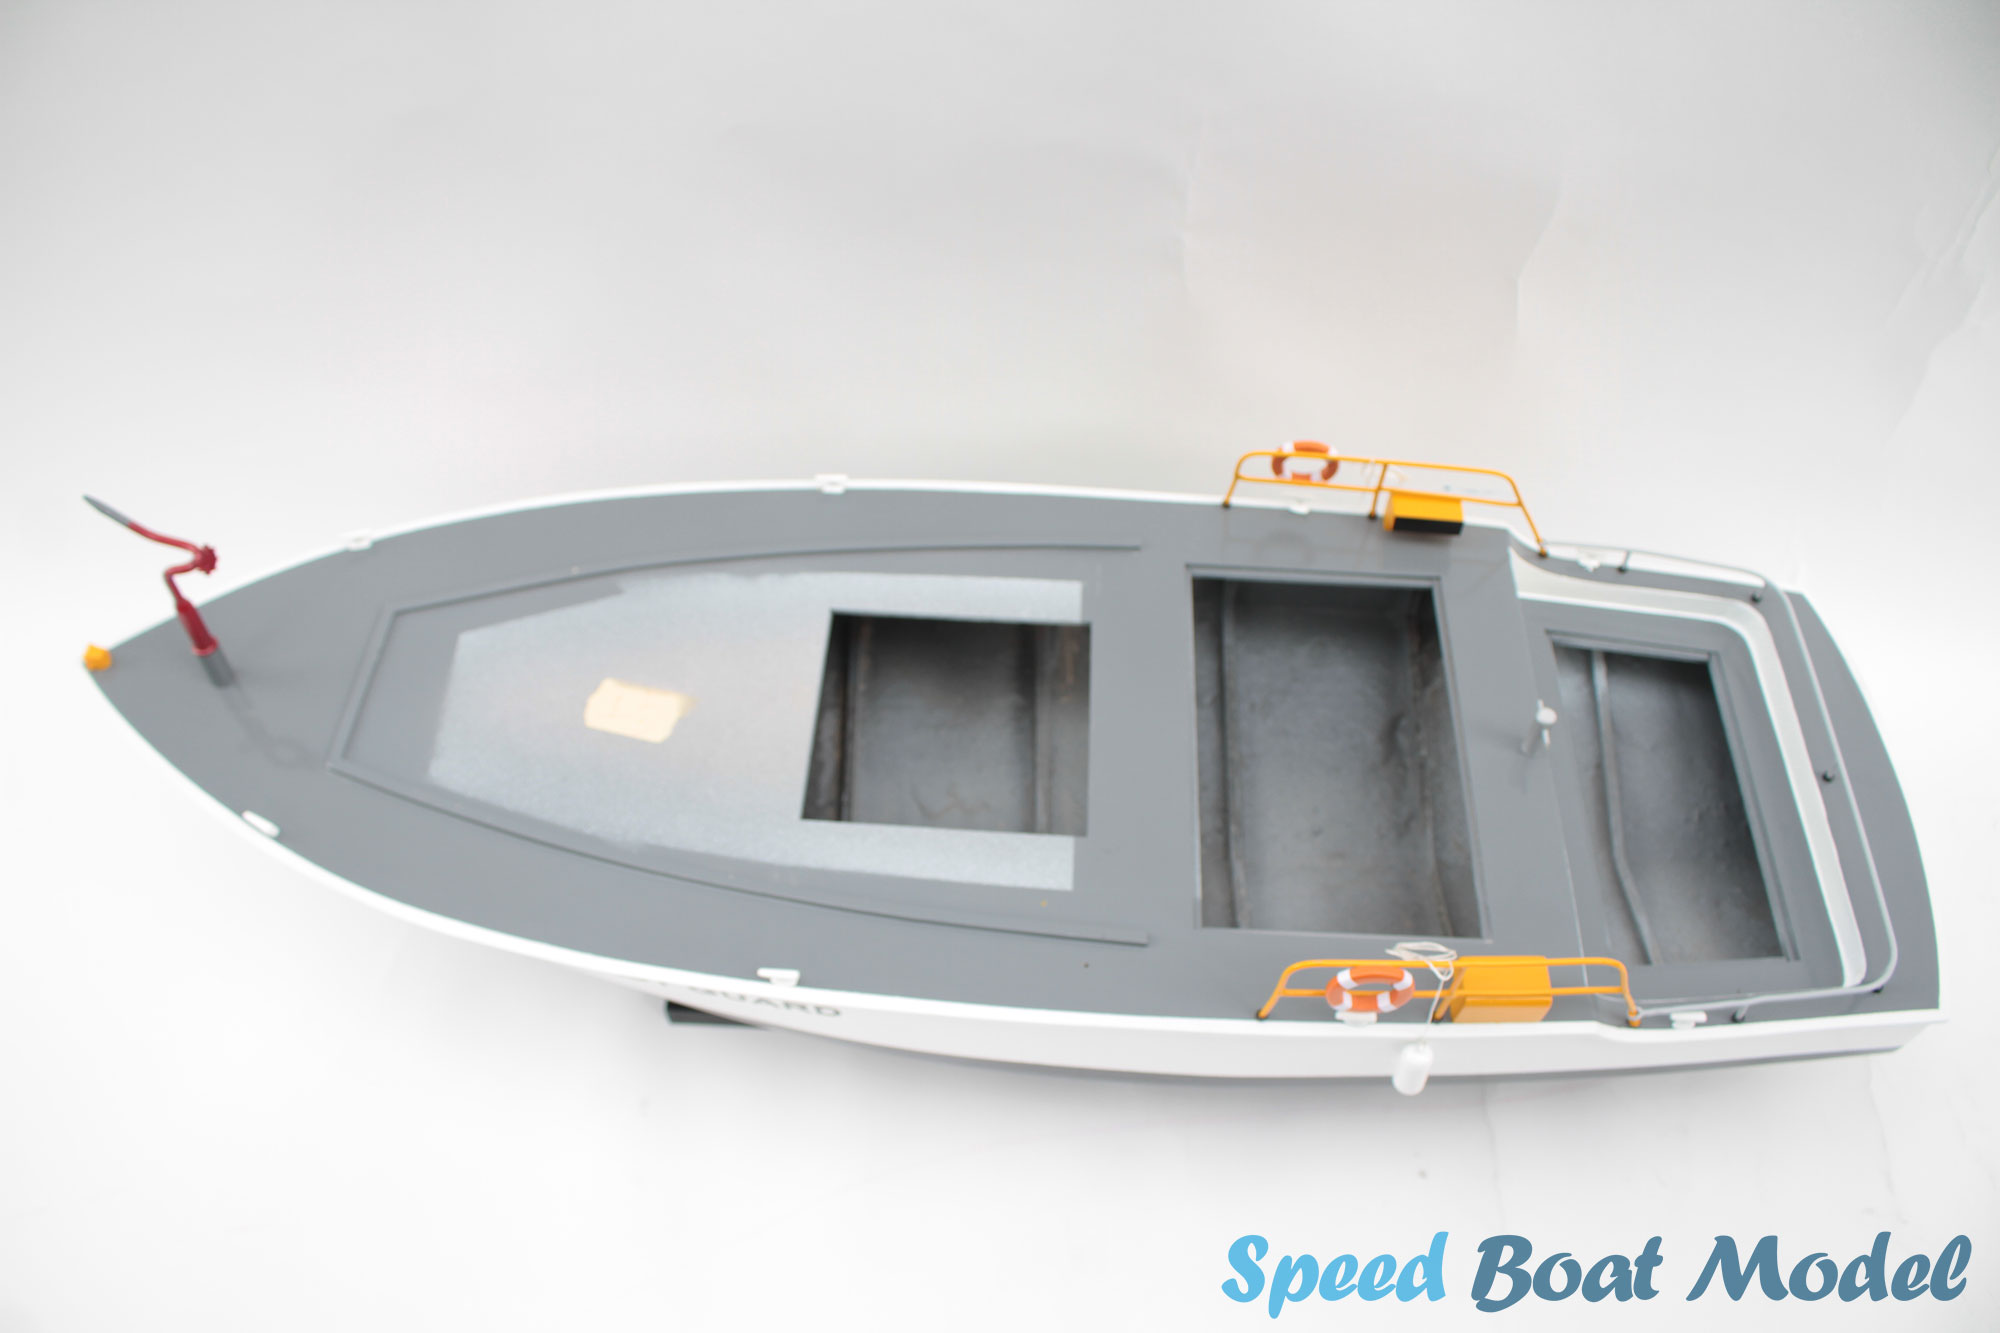 Us Coast Guard Healy Speed Boat Model 32.2"